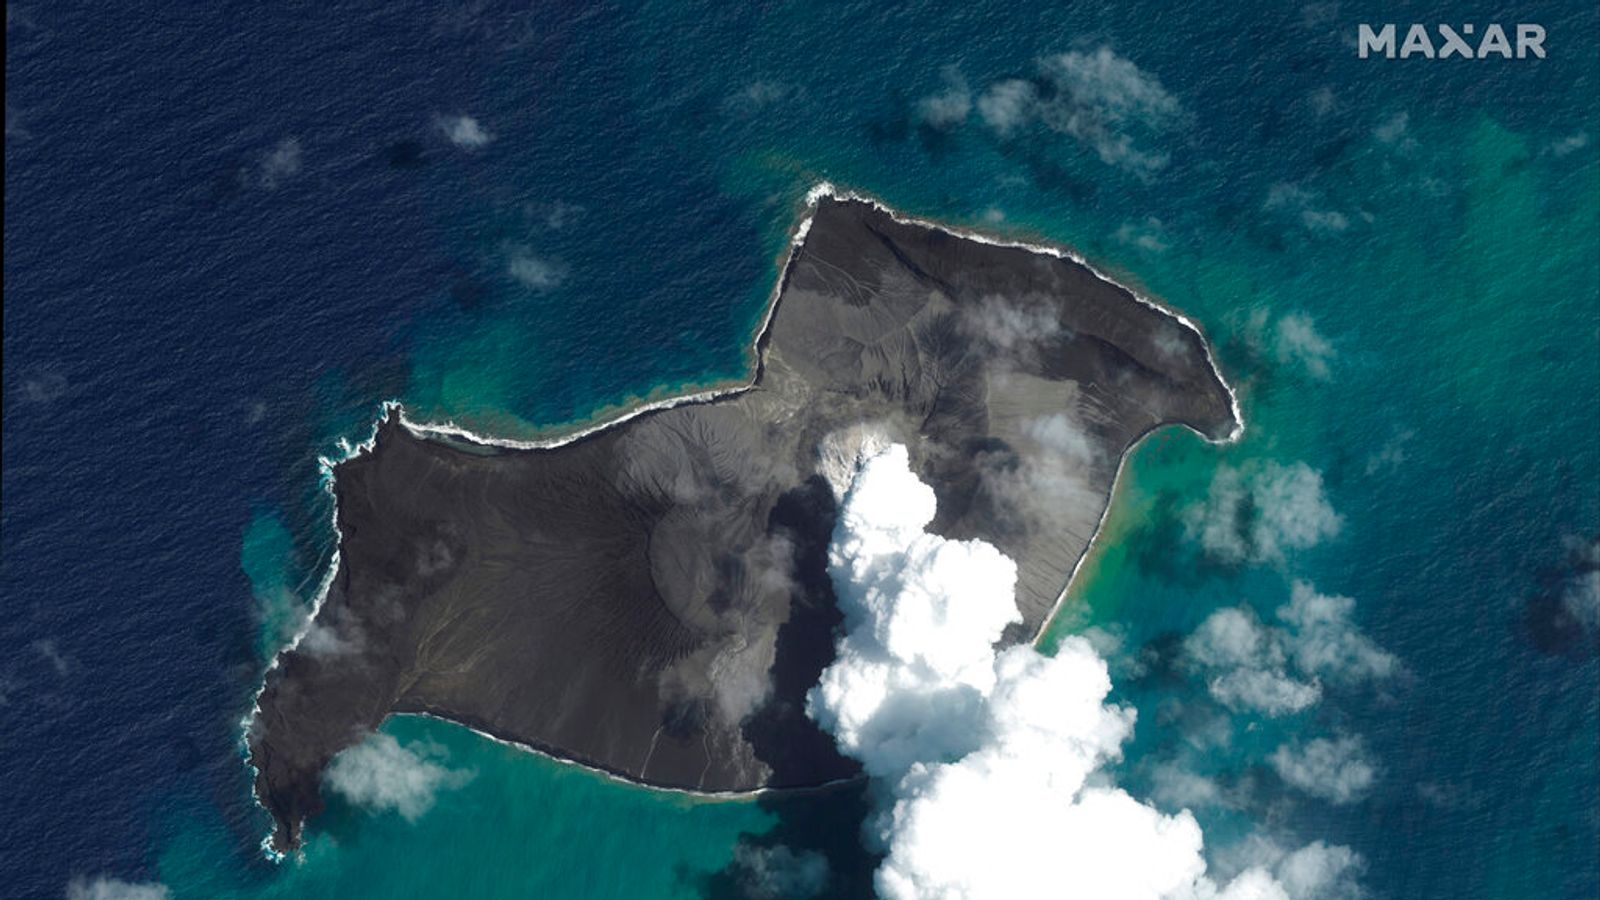 Tonga eruption: Volcano explosion was ‘like bombs going off’, says British man living on Vava’u island